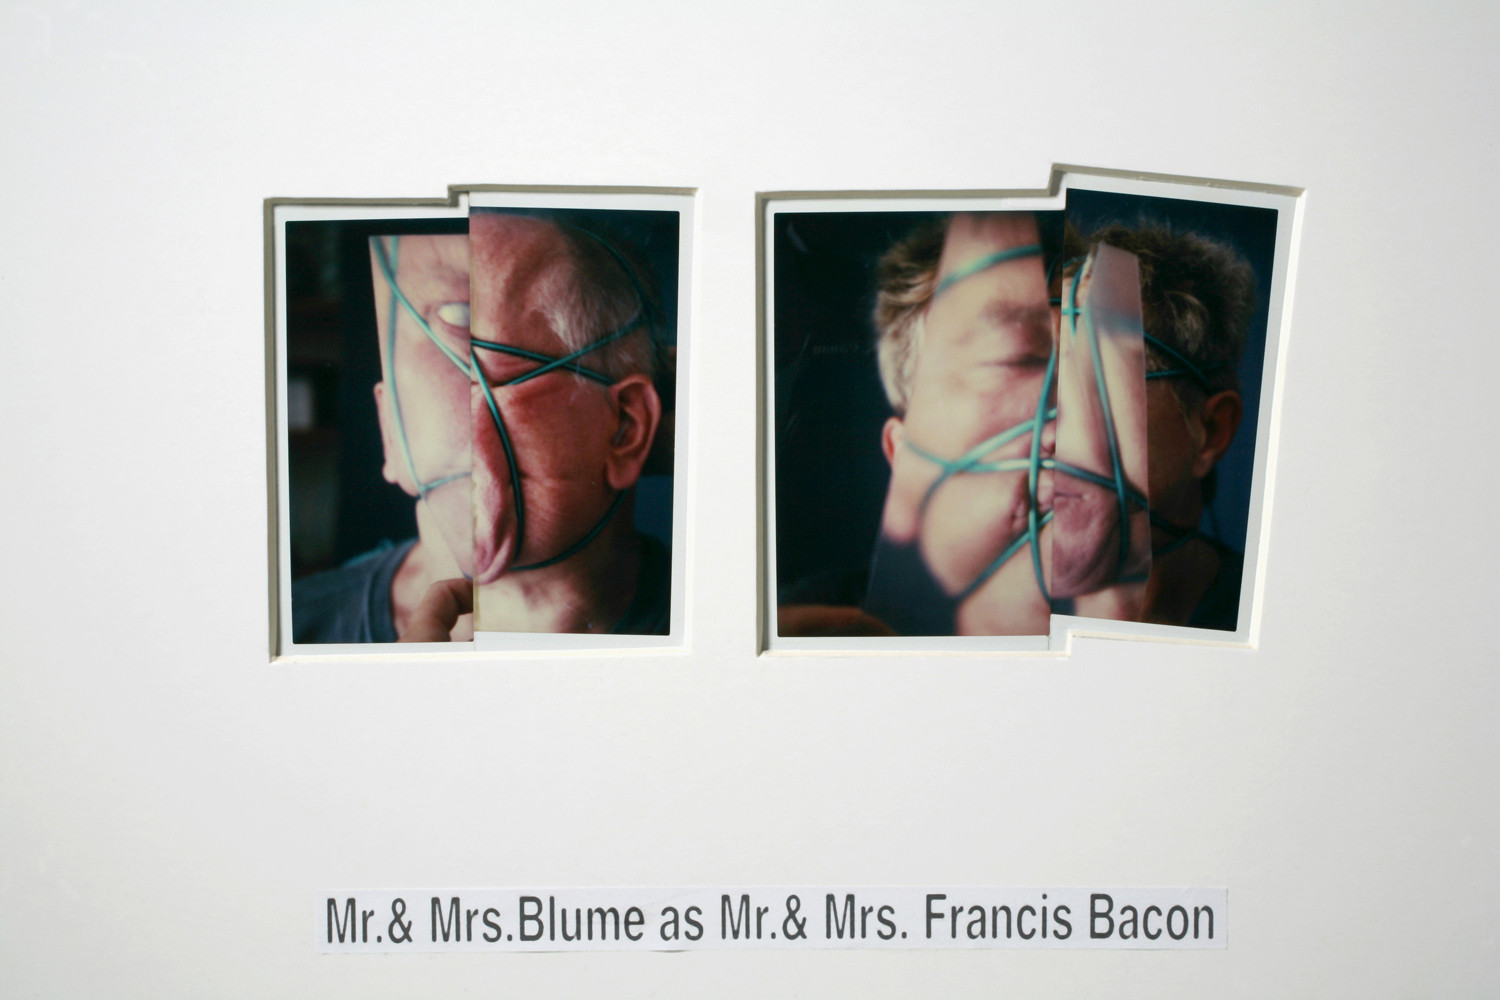 Anna & Bernhard Blume, ‘Mr. & Mrs. Blume as Mr. & Mrs. Francis Bacon’, 1995